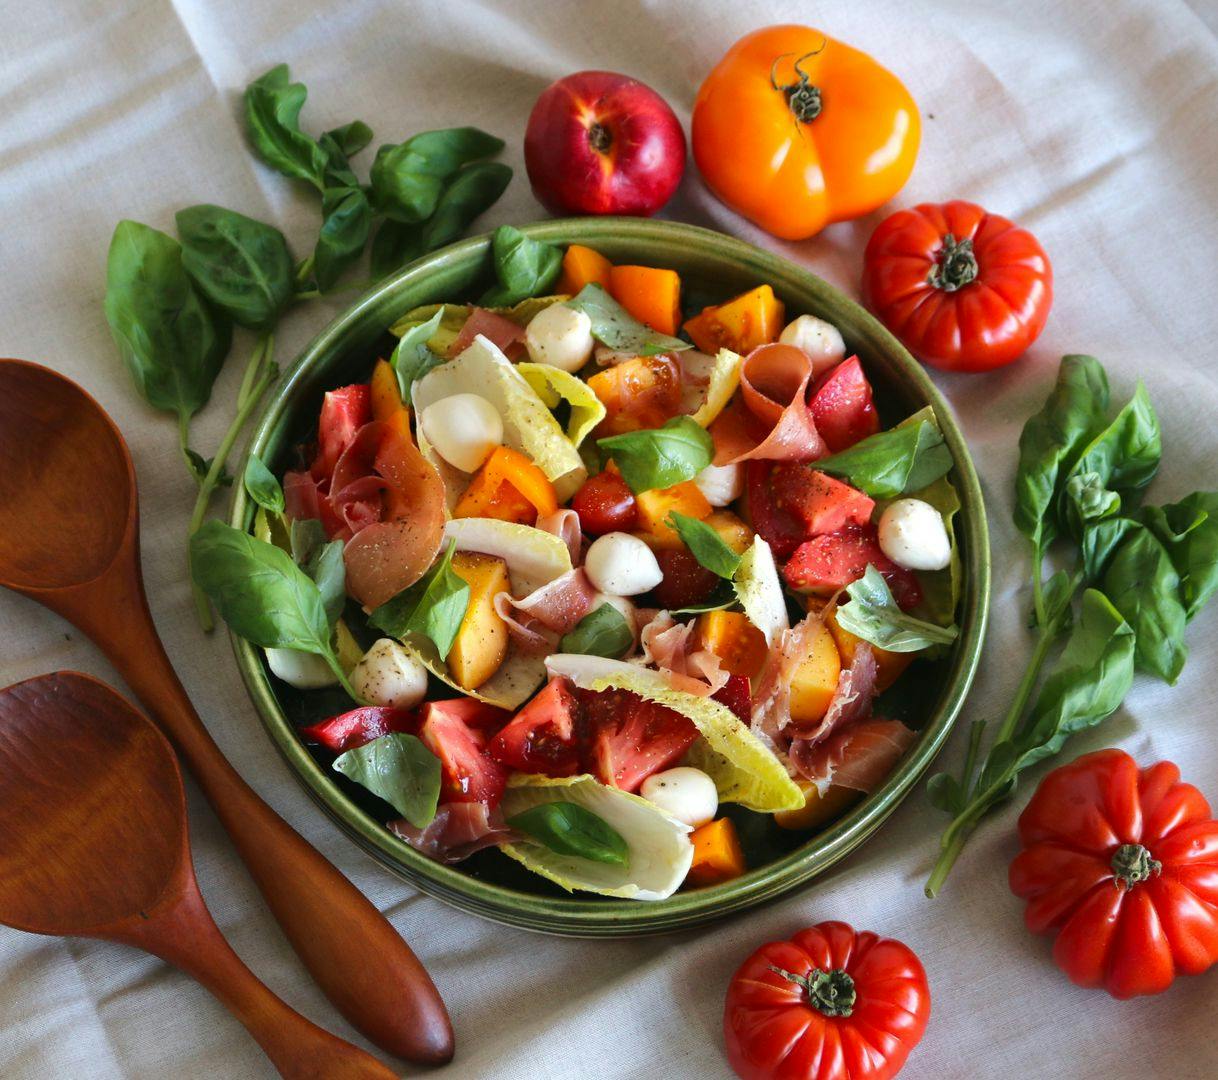 Heirloom tomato, nectarine, jamon, witloof and bocconcini salad